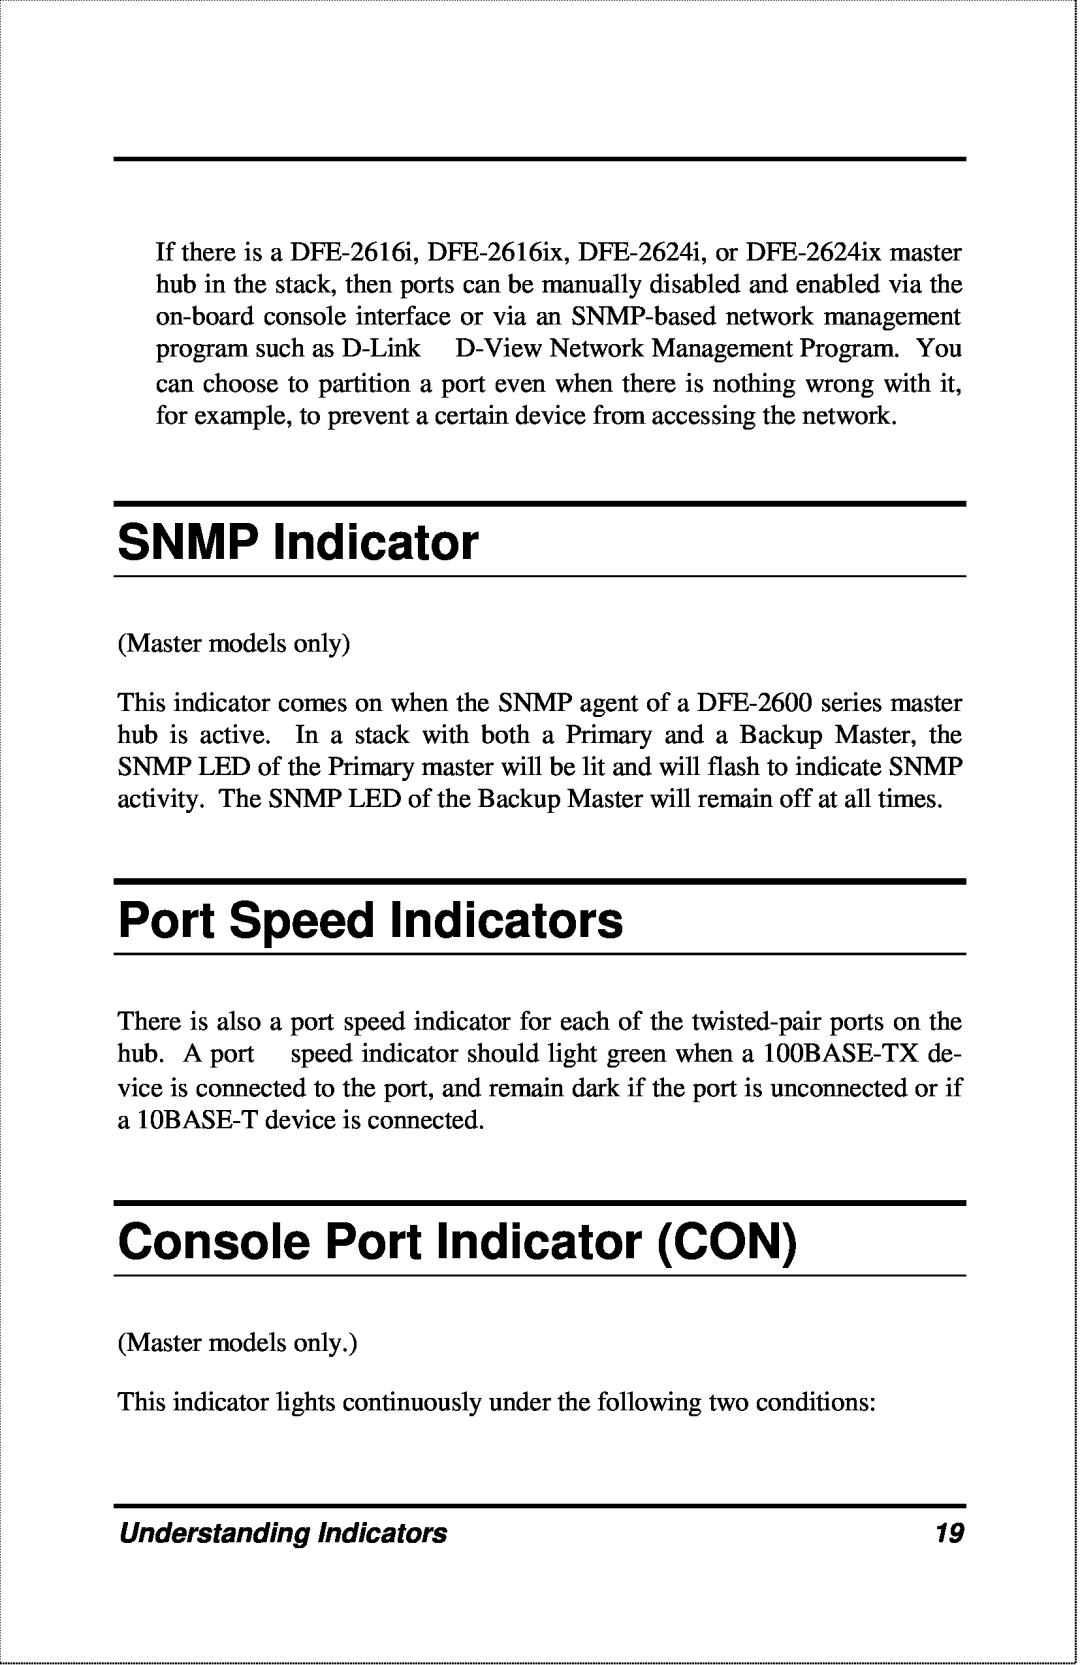 D-Link DFE-2600 manual SNMP Indicator, Port Speed Indicators, Console Port Indicator CON, Understanding Indicators 